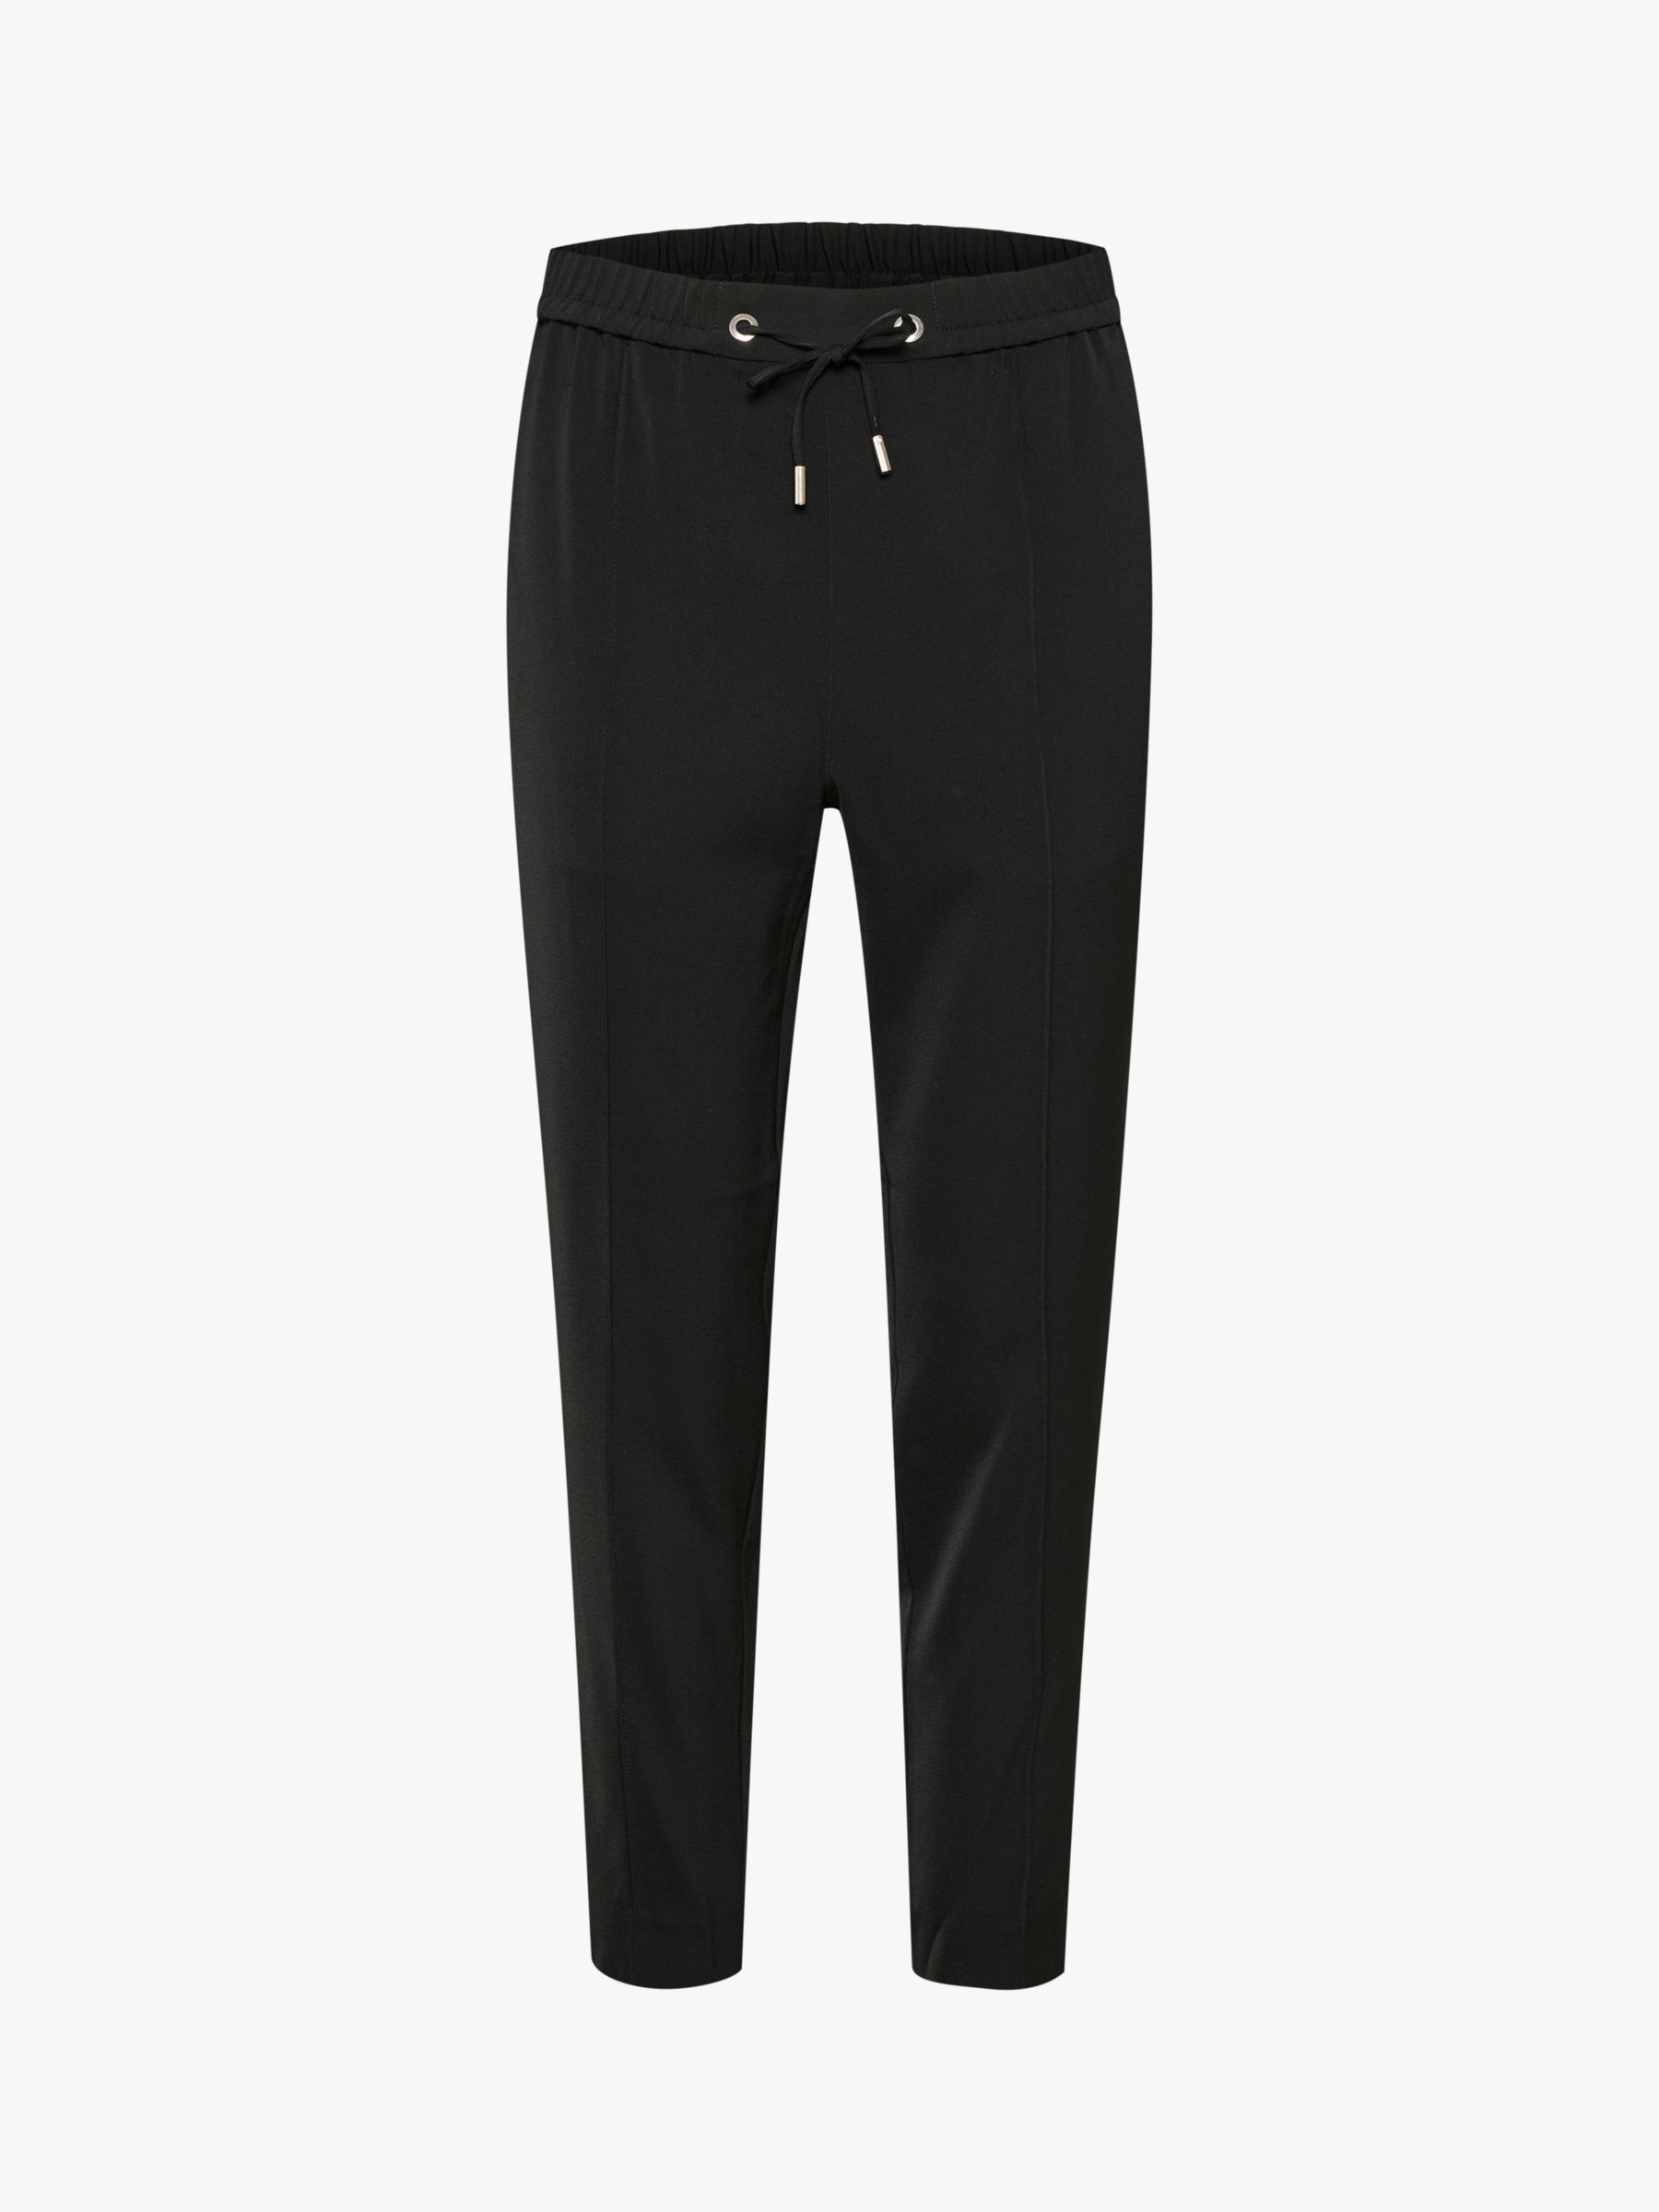 InWear Padia Pull On Trousers, Black at John Lewis & Partners